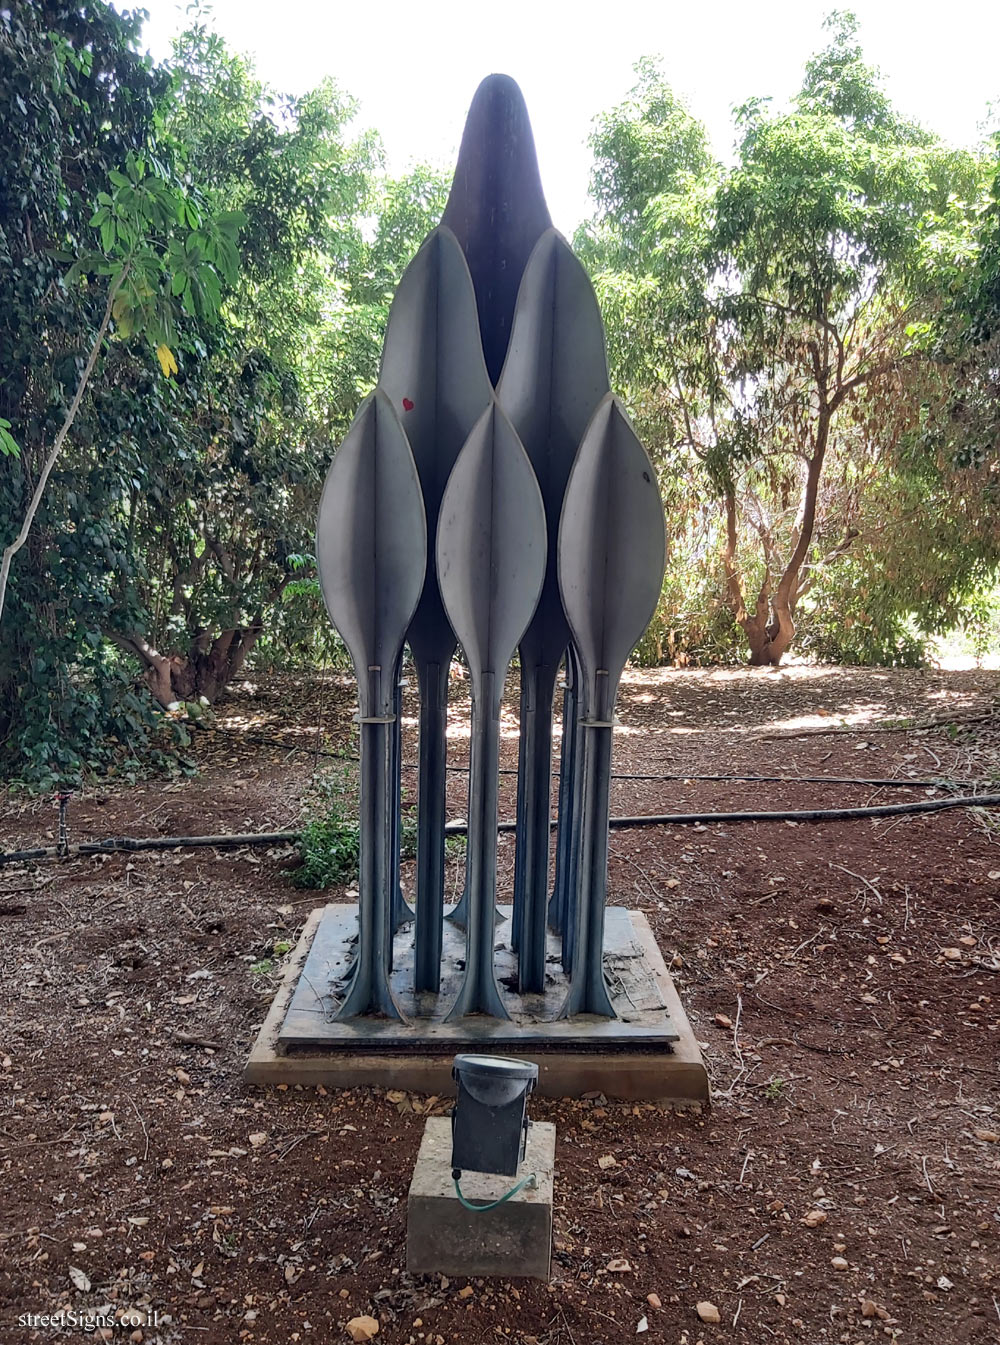 The Hebrew University of Jerusalem - Givat Ram Campus - "The Shrine of the Trees" - Israel Hadany